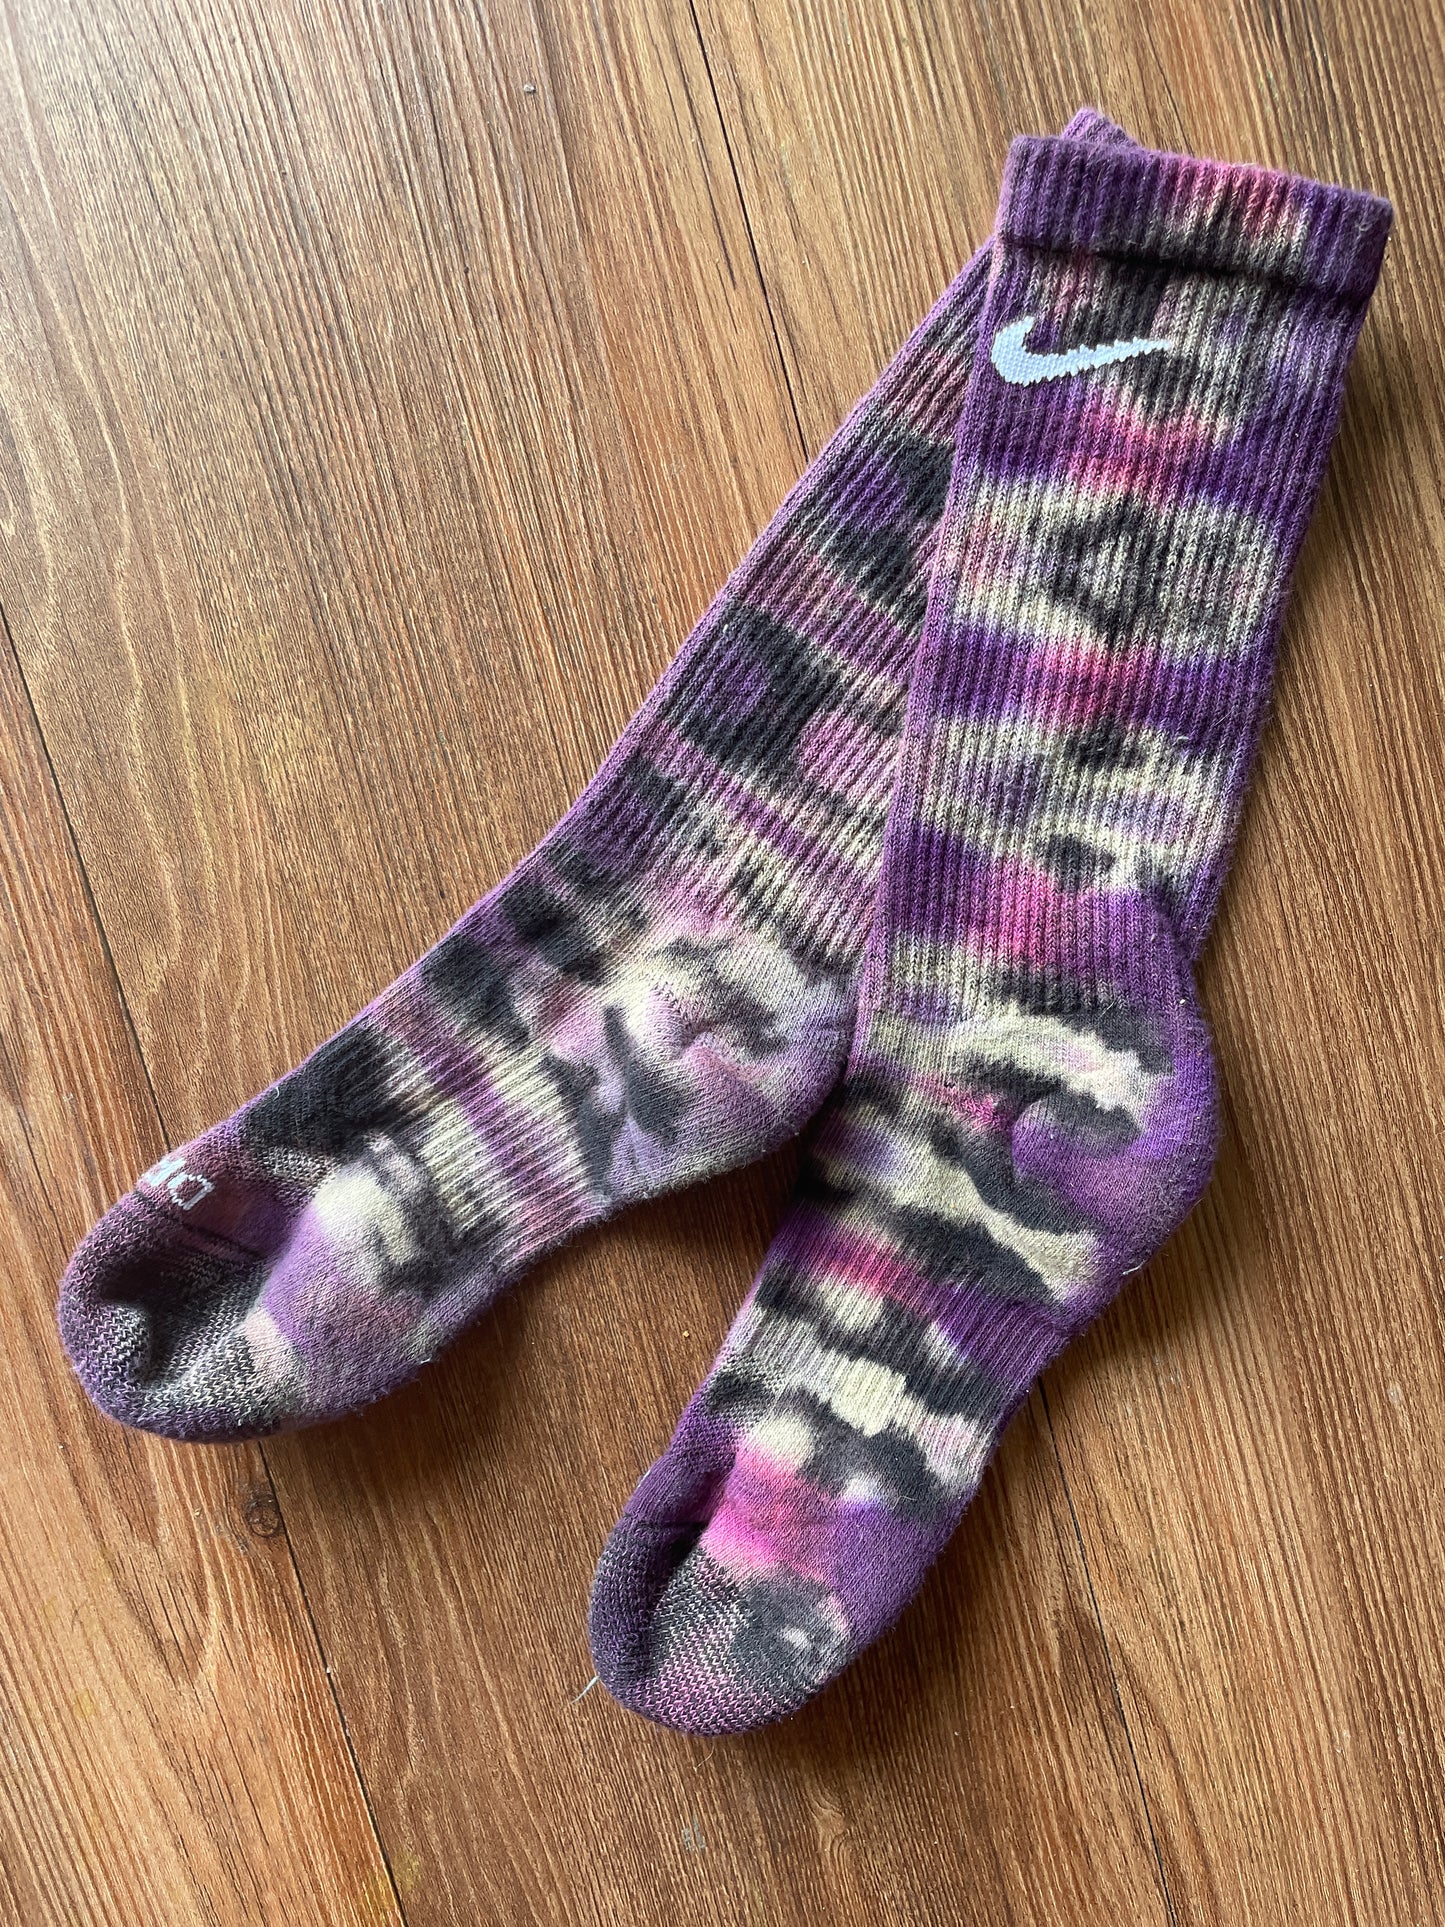 Pink, Purple, and Black Reverse Tie Dye Nike Dri-FIT Training Socks - Size Medium (Men's 6-8/Women's 7-10)